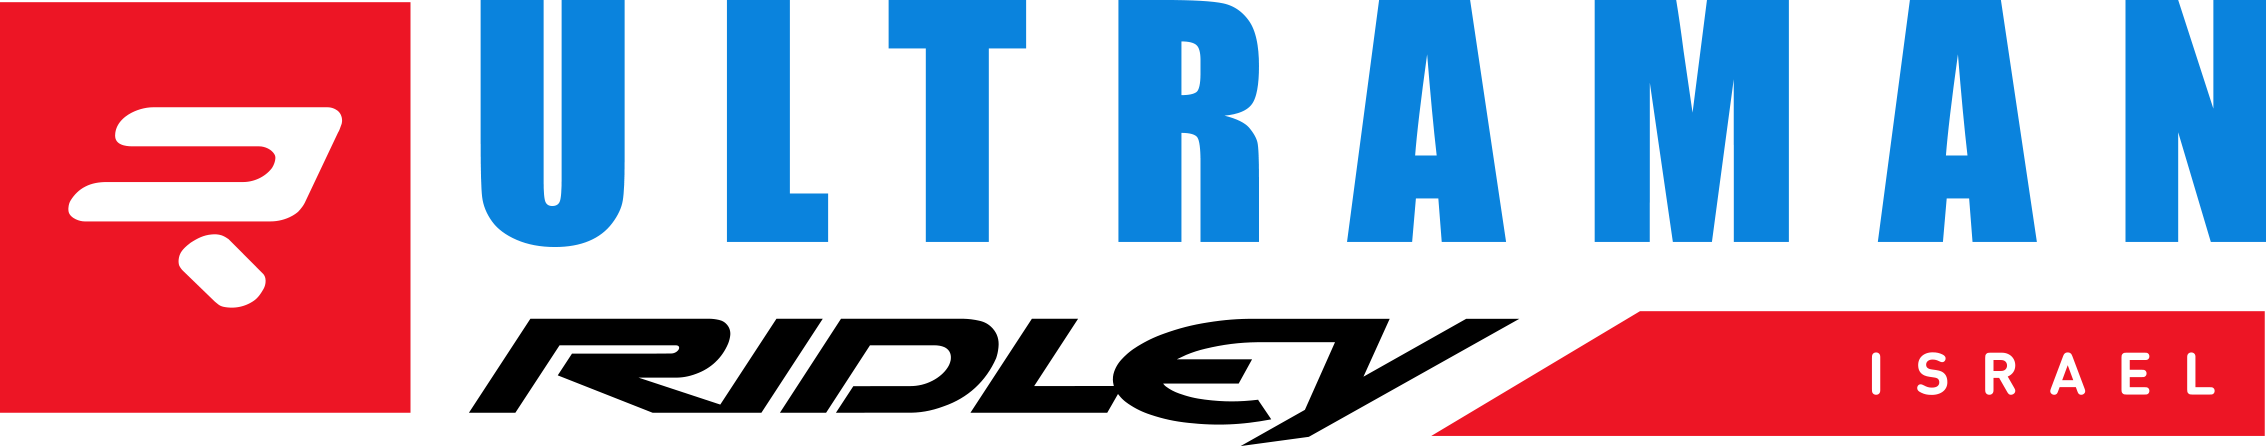 Hirus Ultra Marathon logo